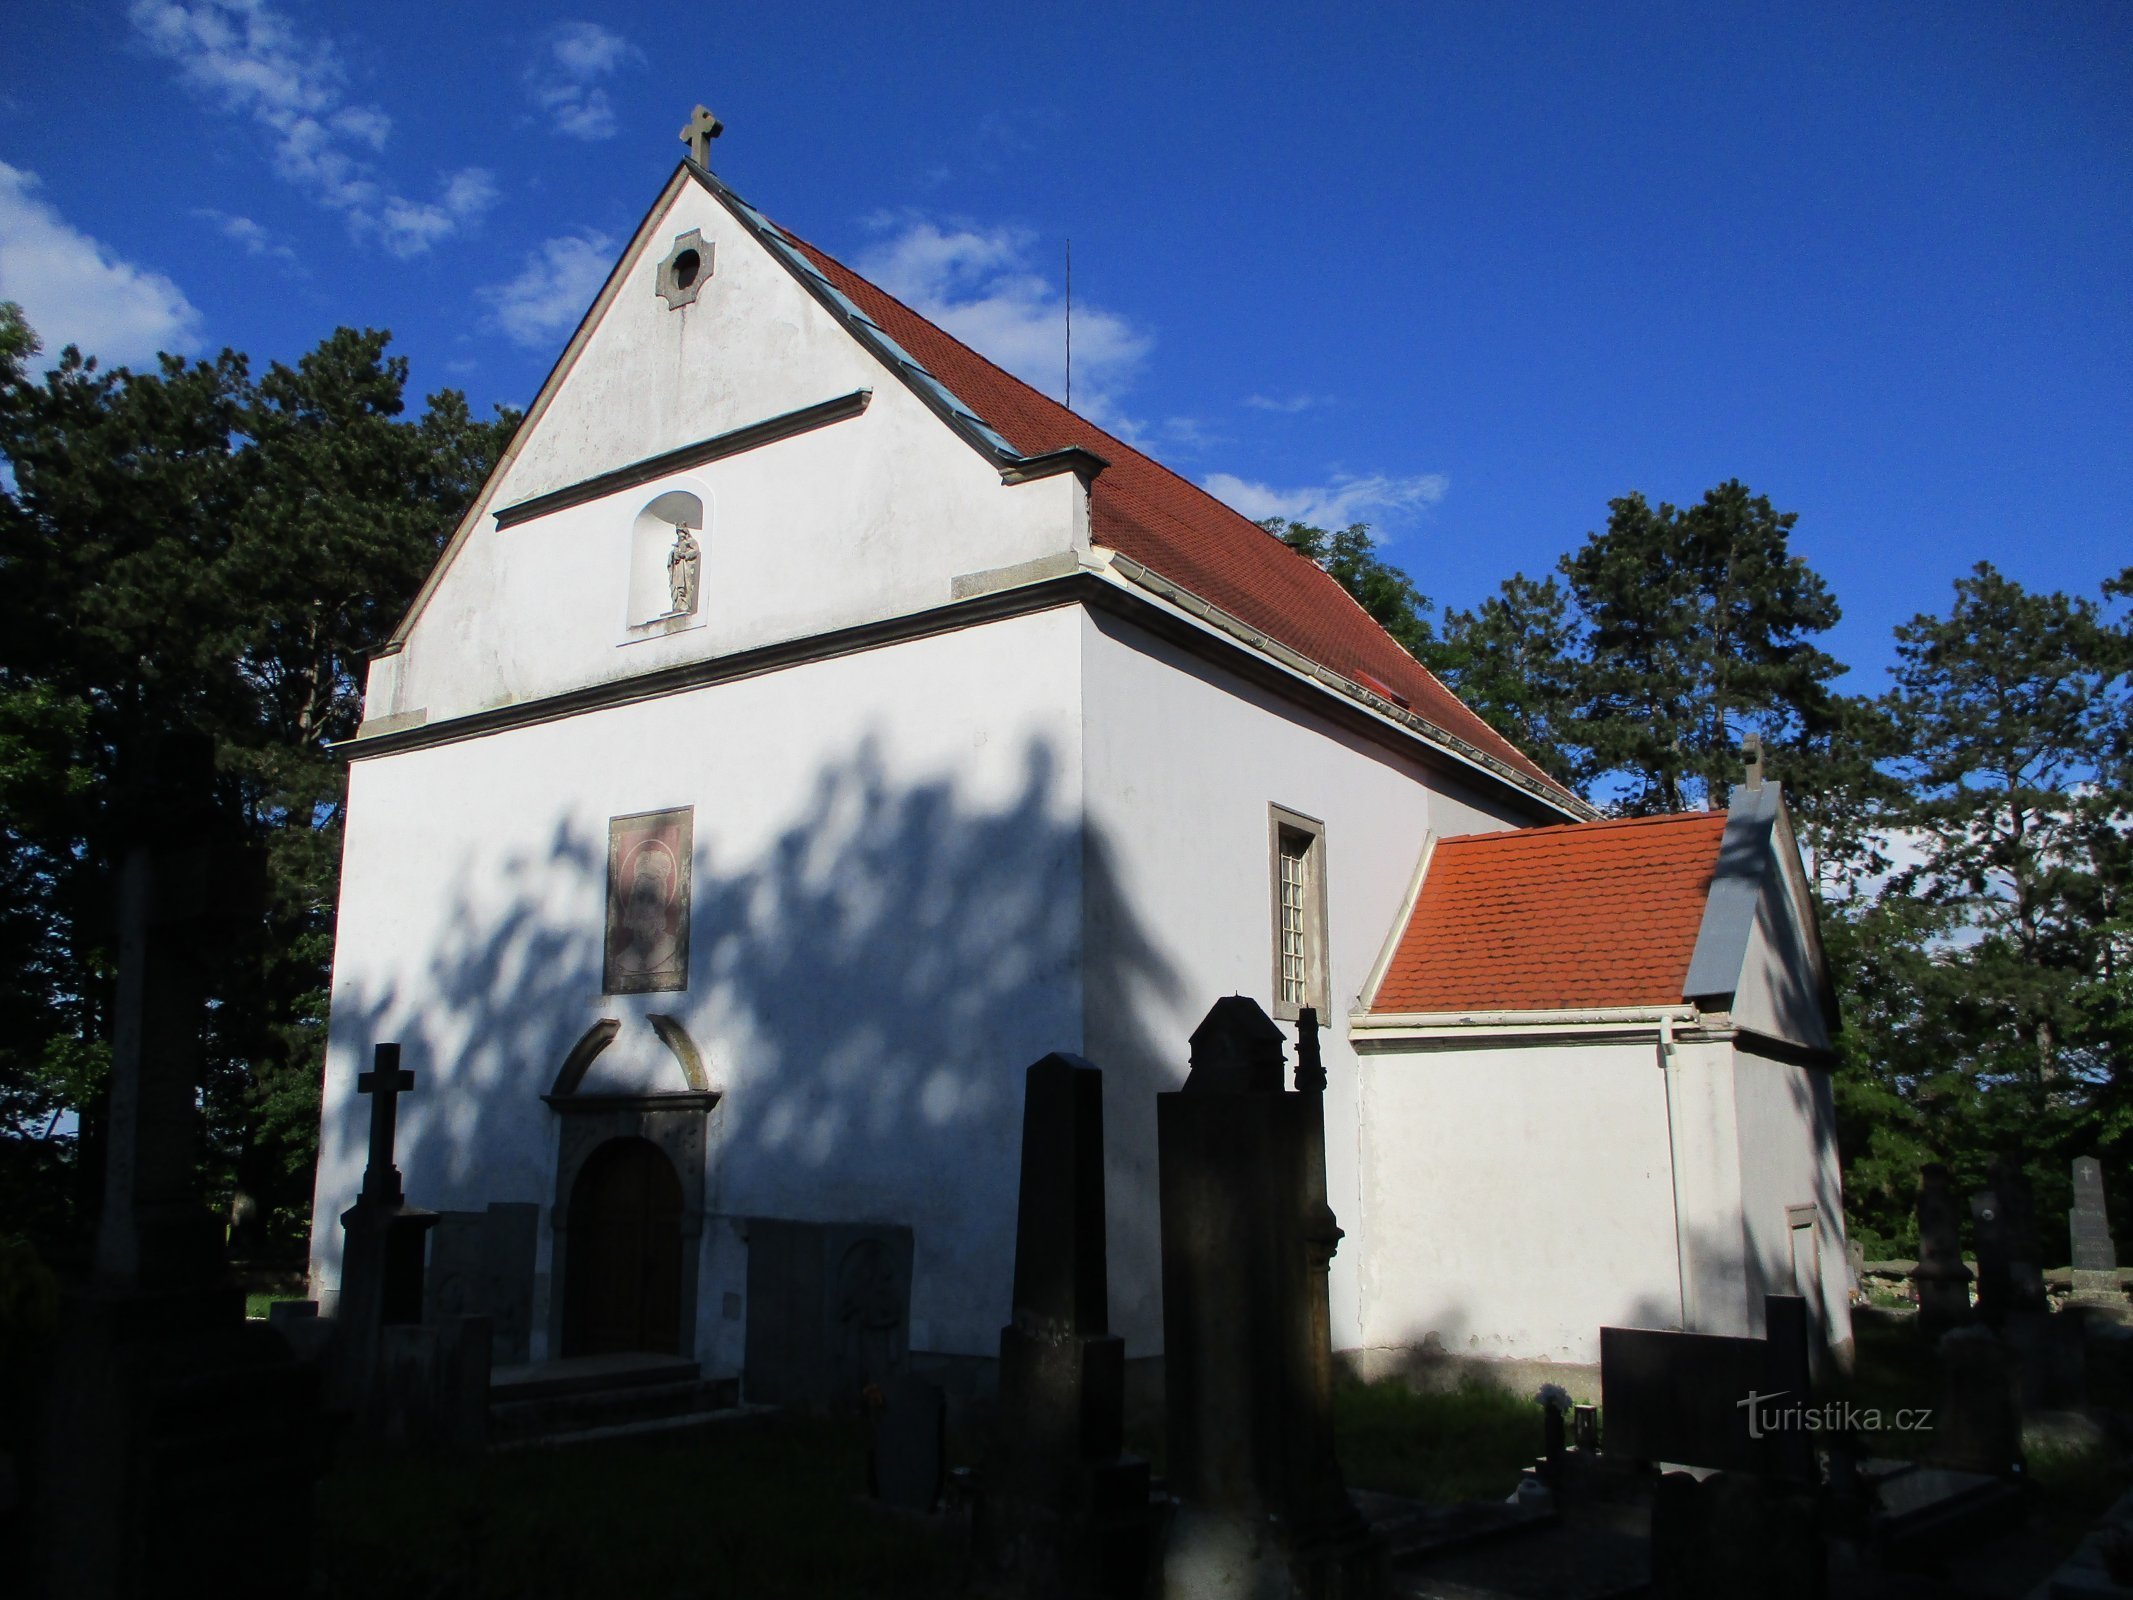 Cerkev sv. Wenceslas (Habřina, 2.6.2019. junij XNUMX)